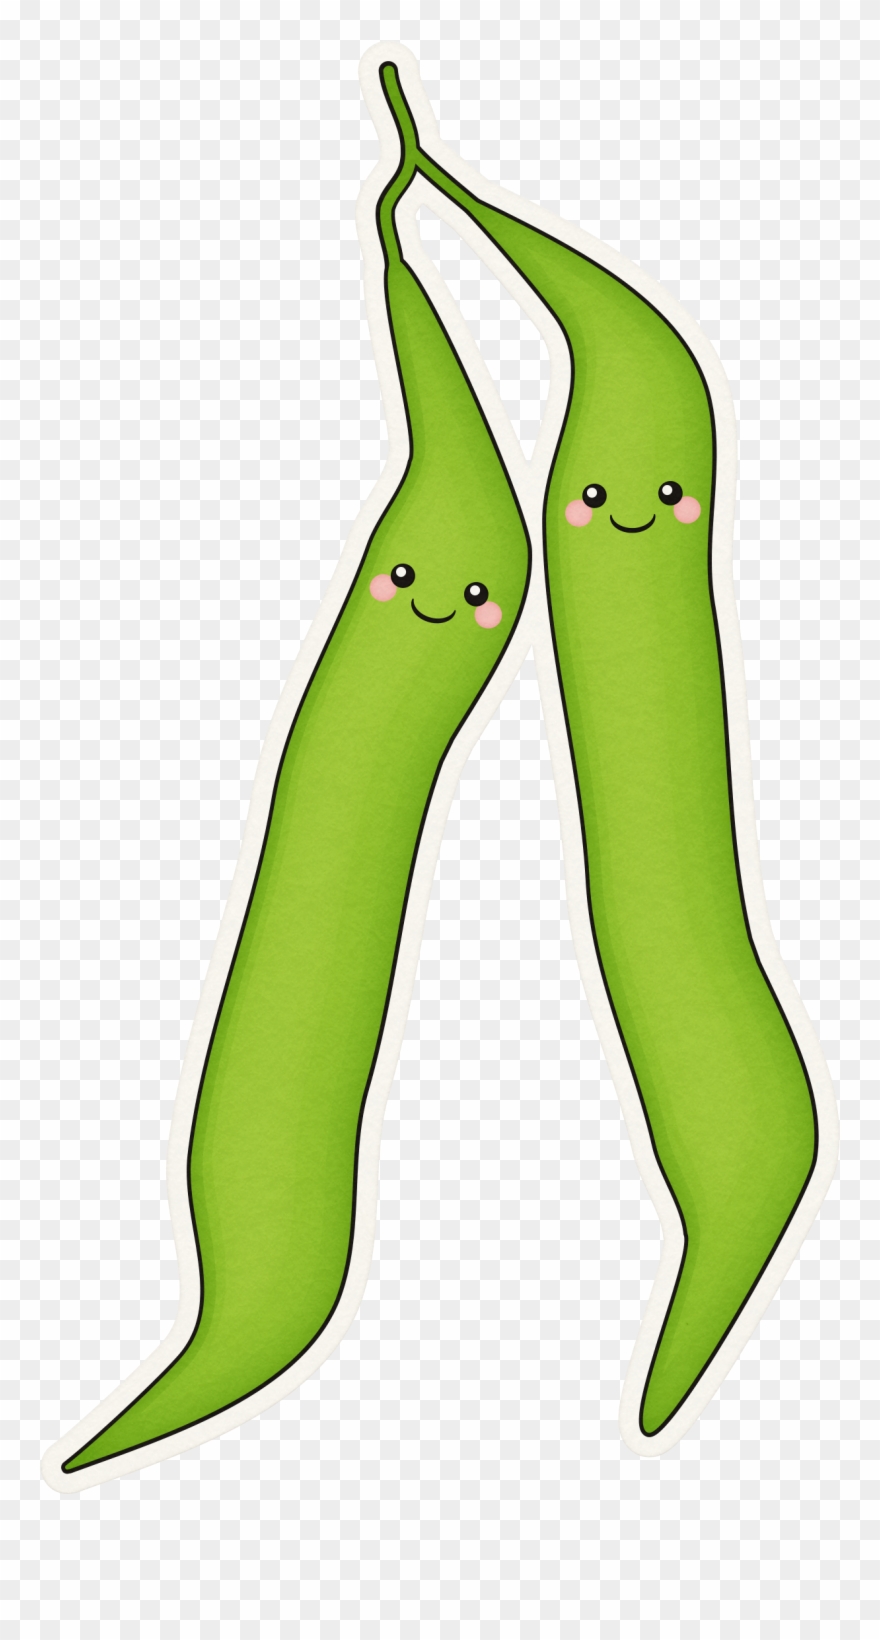 Cute green png download. Beans clipart string bean